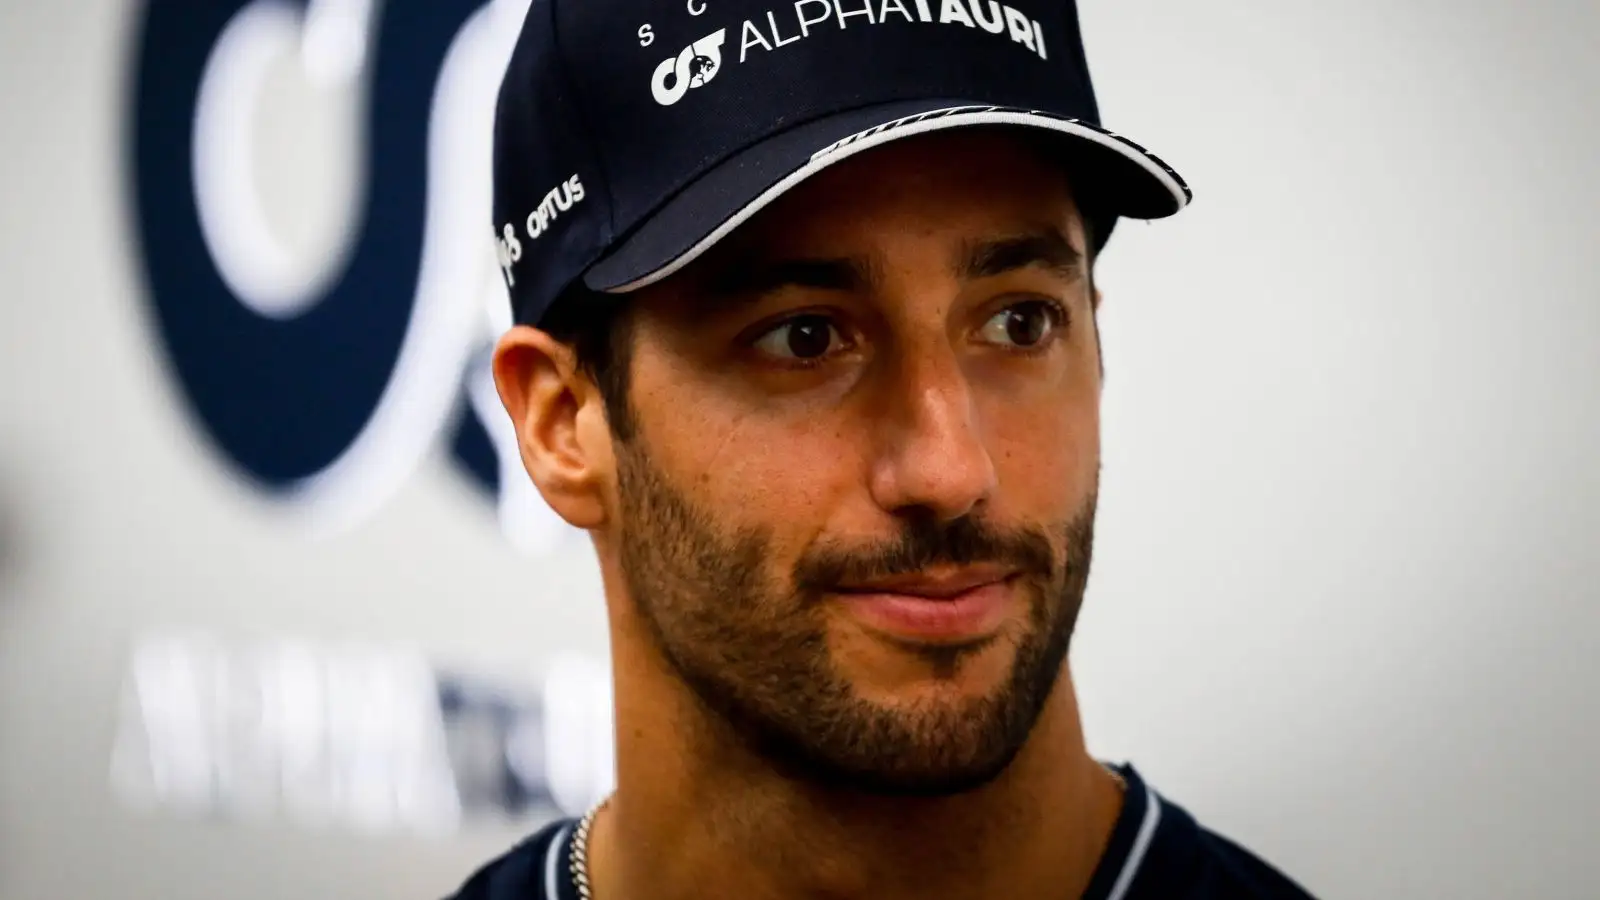 AlphaTauri driver Daniel Ricciardo faces the media.